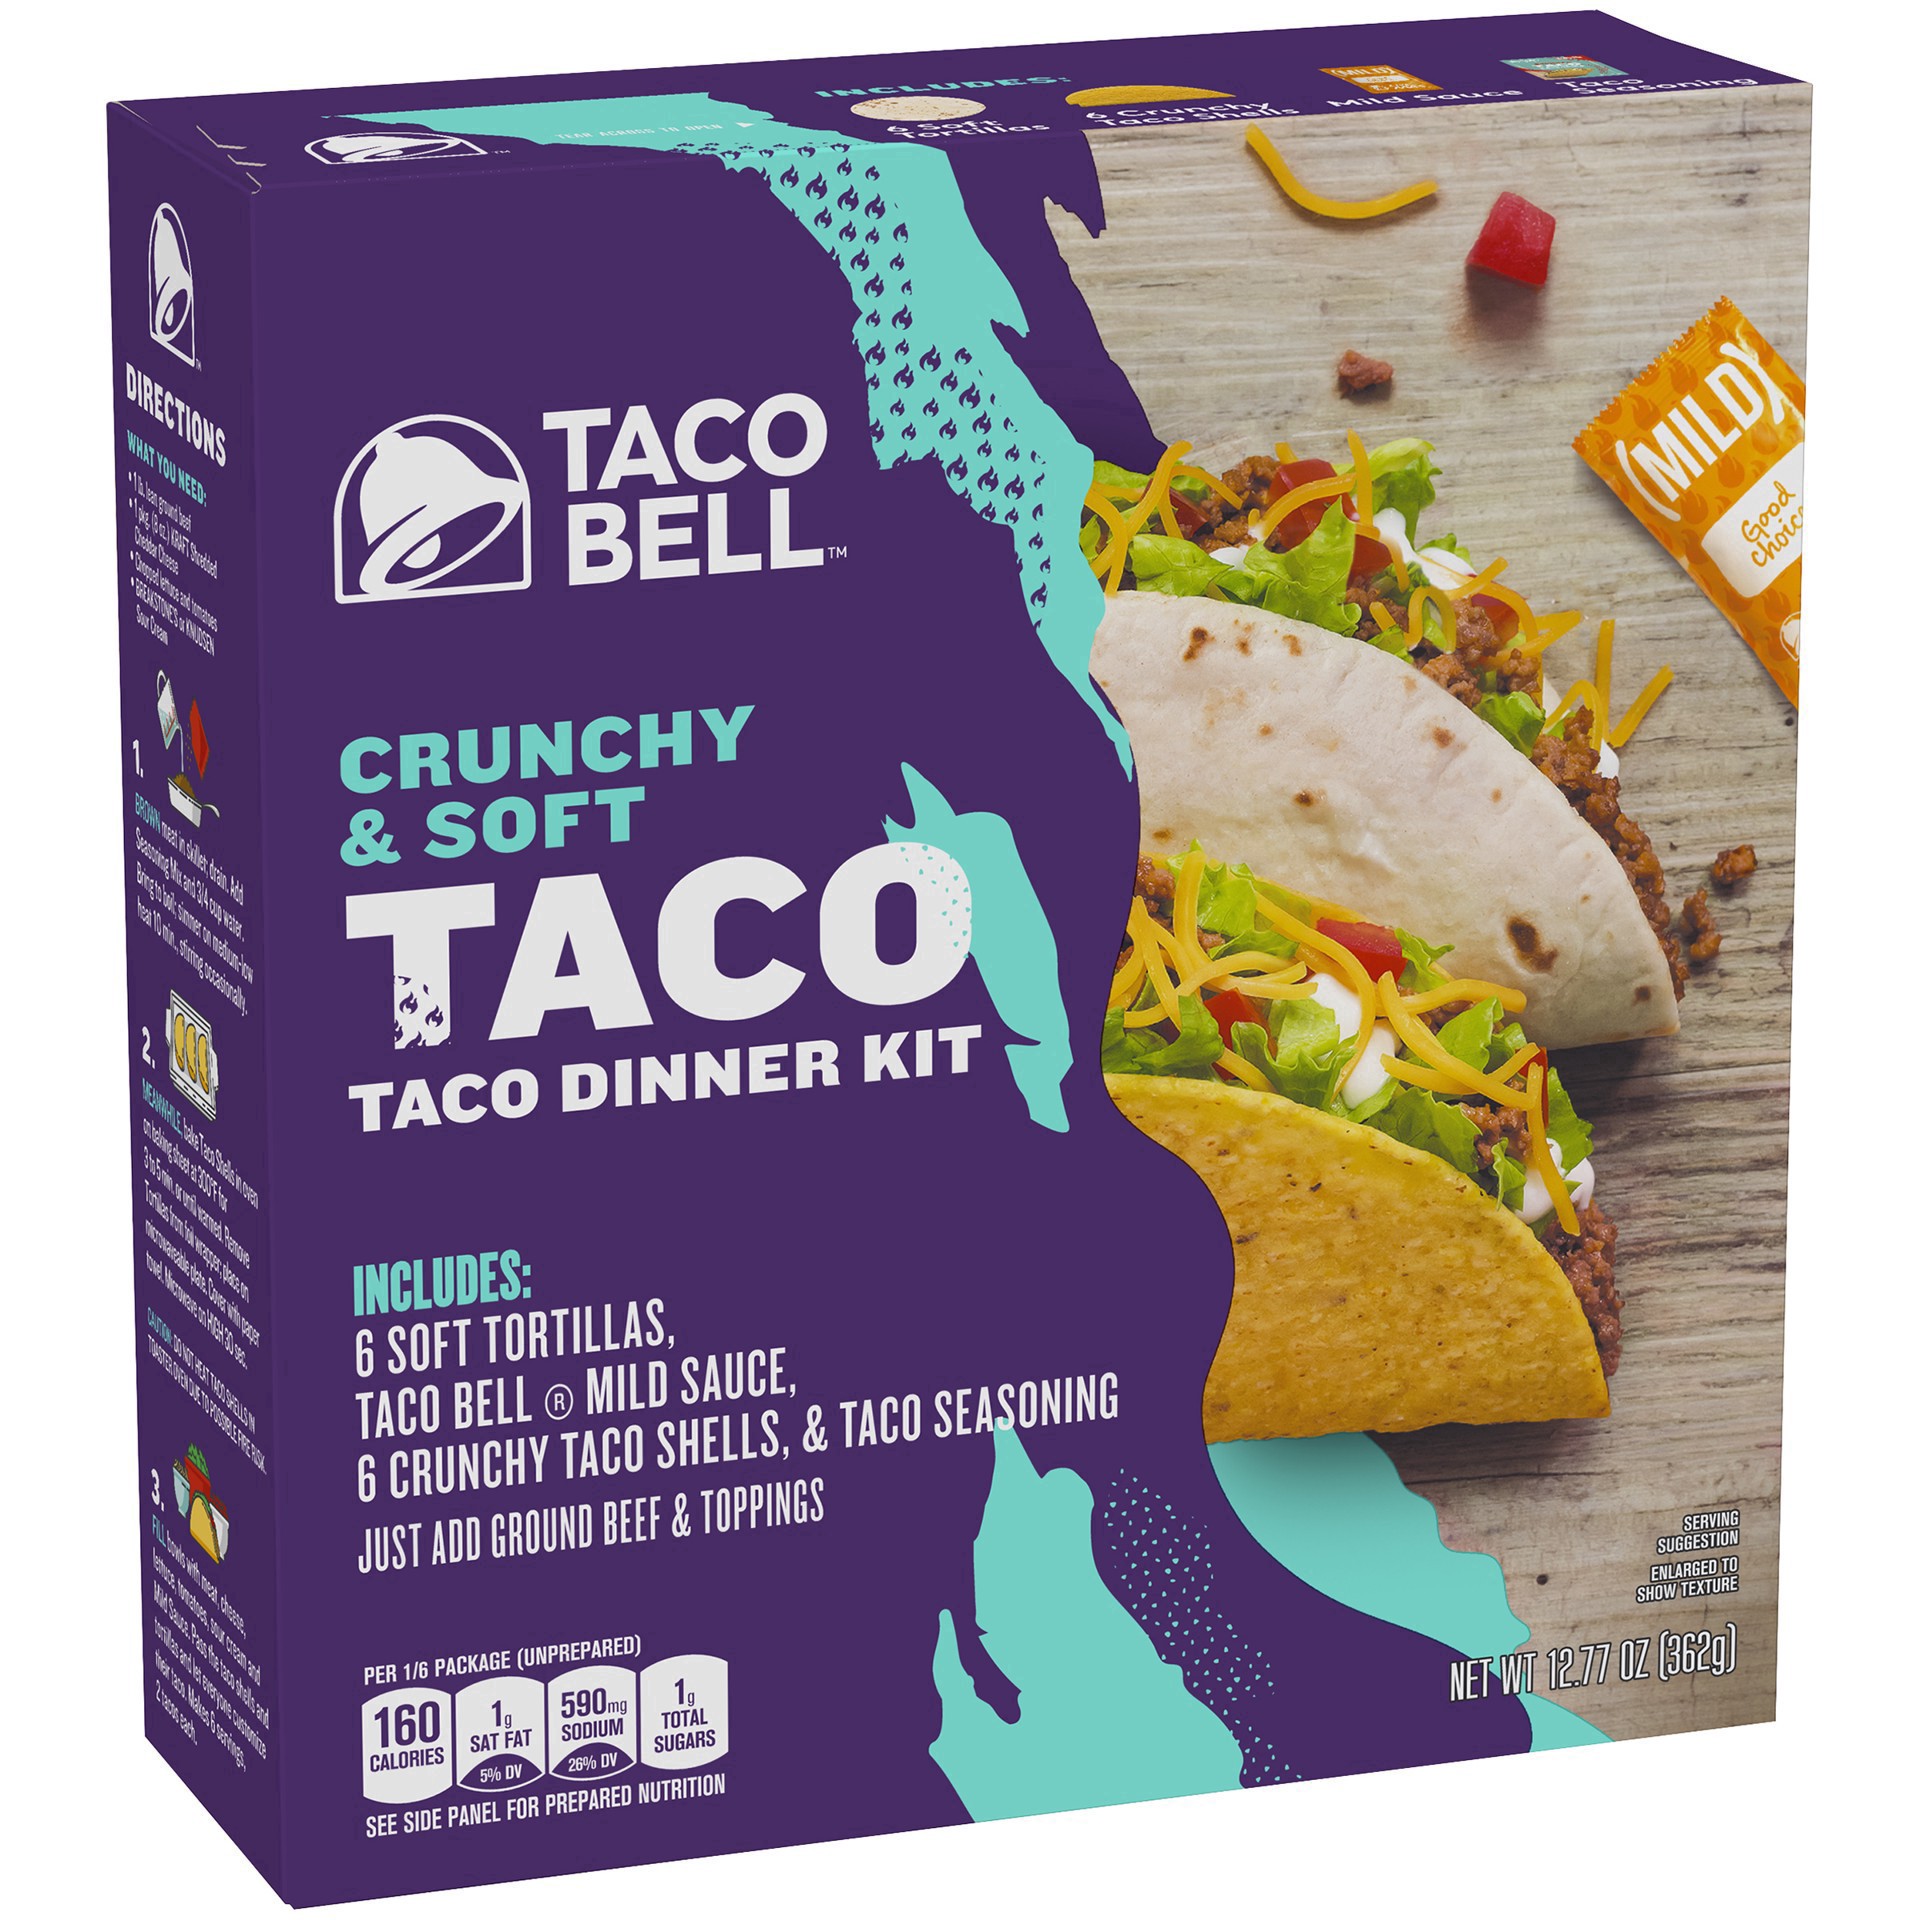 slide 37 of 101, Taco Bell Crunchy & Soft Taco Cravings Kit with 6 Soft Tortillas, 6 Crunchy Taco Shells, Taco Bell Mild Sauce & Seasoning, 12.77 oz Box, 1 ea